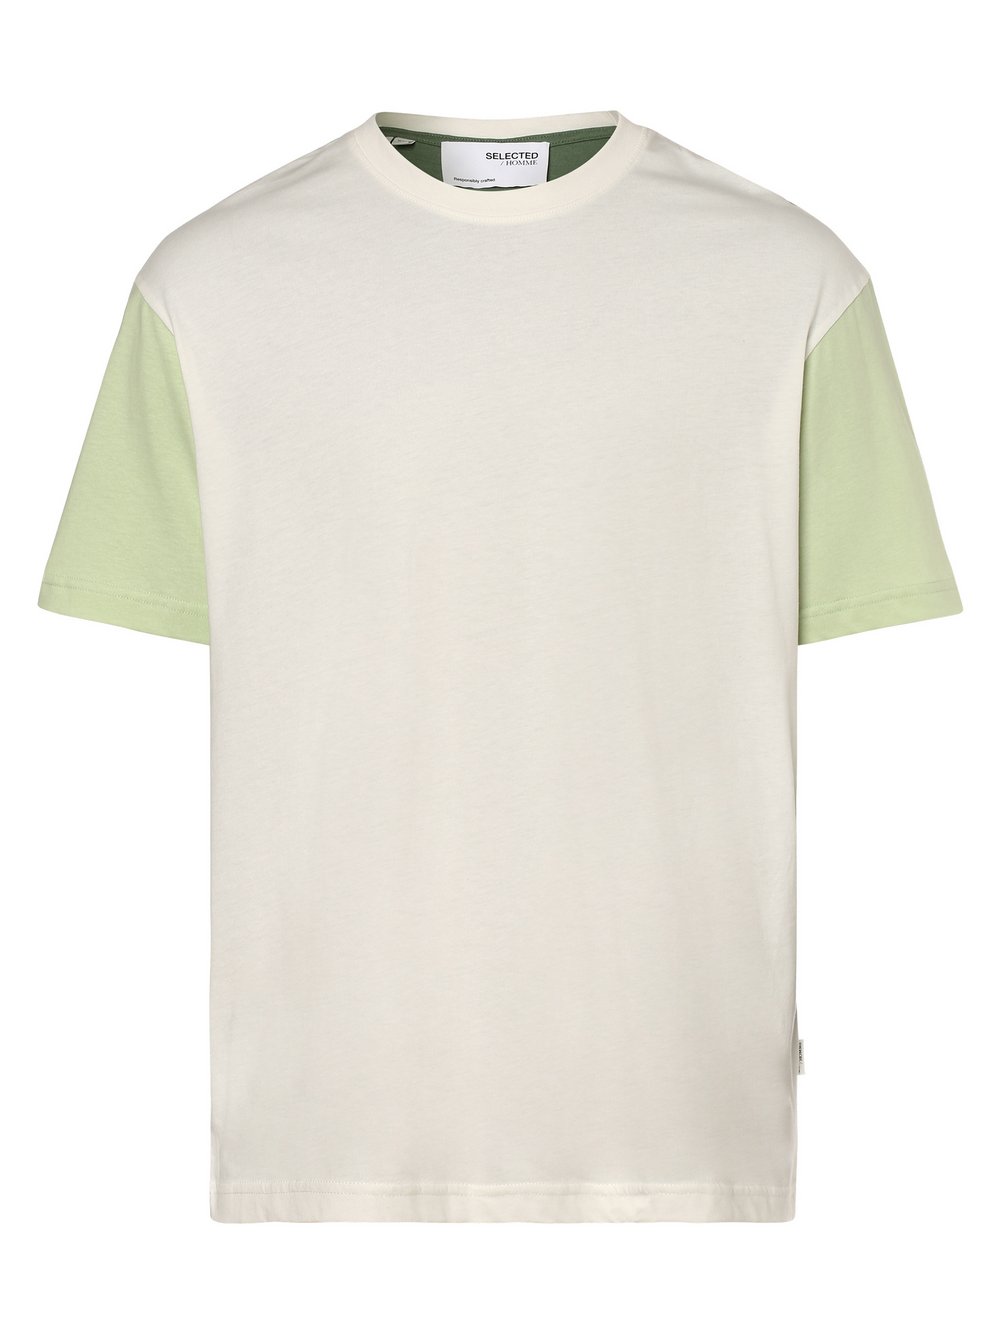 Selected - T-shirt męski – SLHLoosedominic, biały|zielony